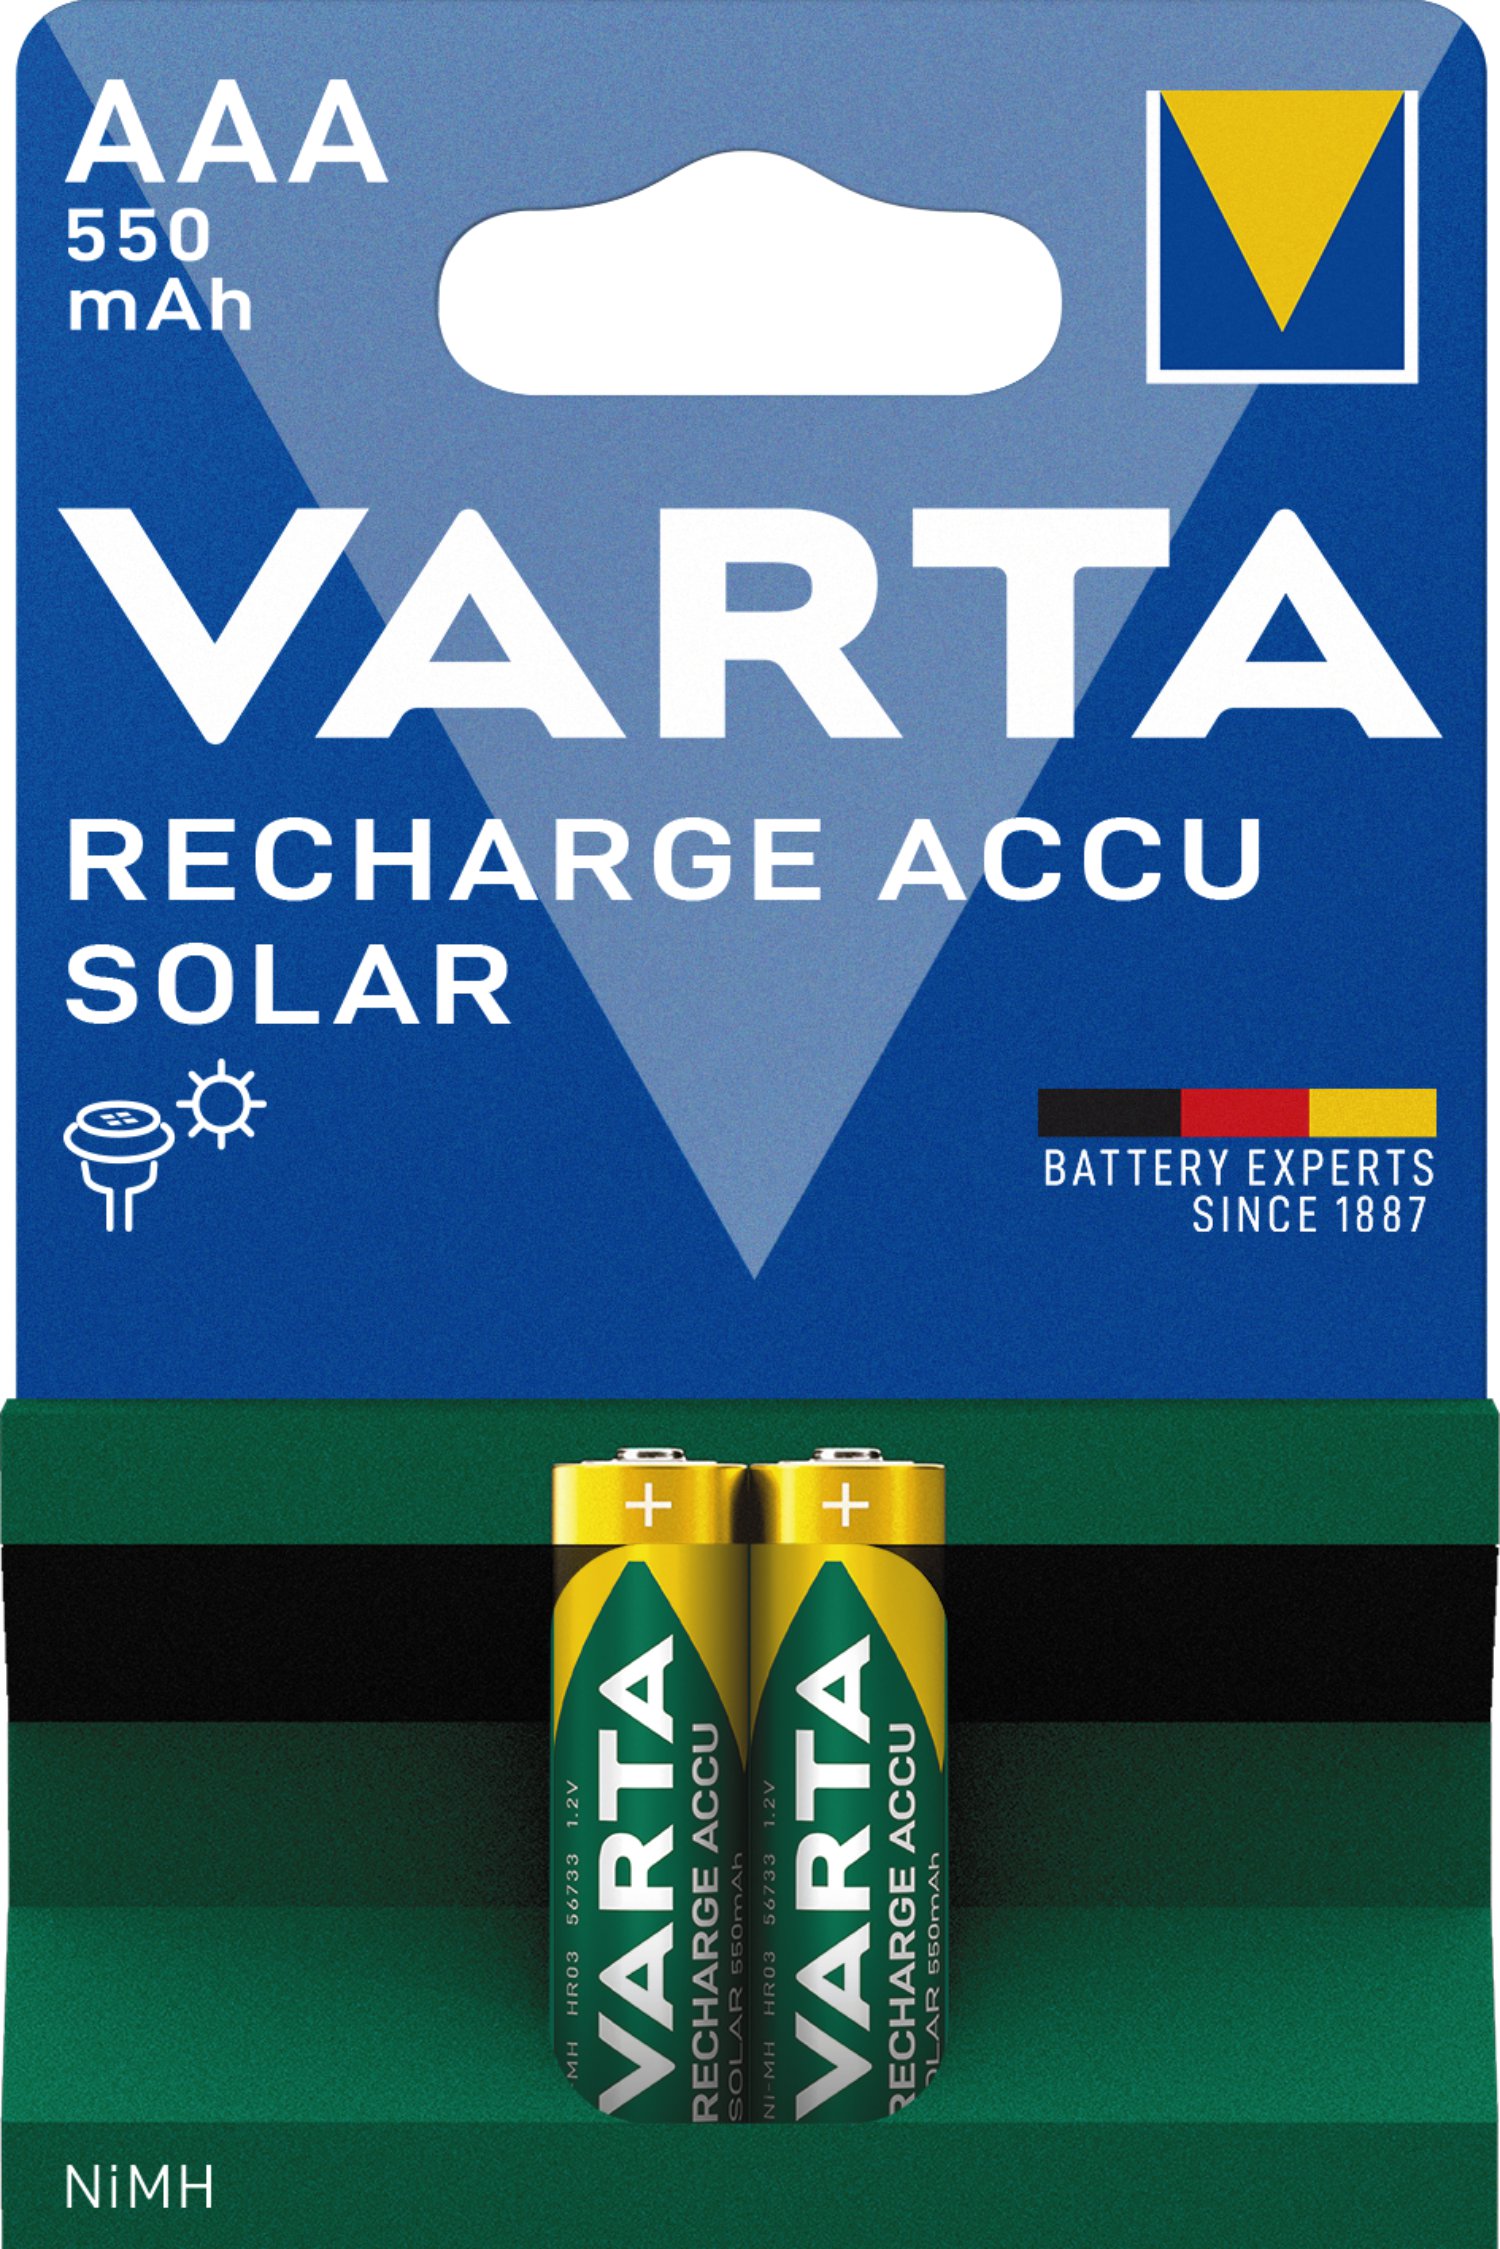 VARTA Recharge Accu Solar AAA Micro NiMH-Akku 550 mAh 2er Pack